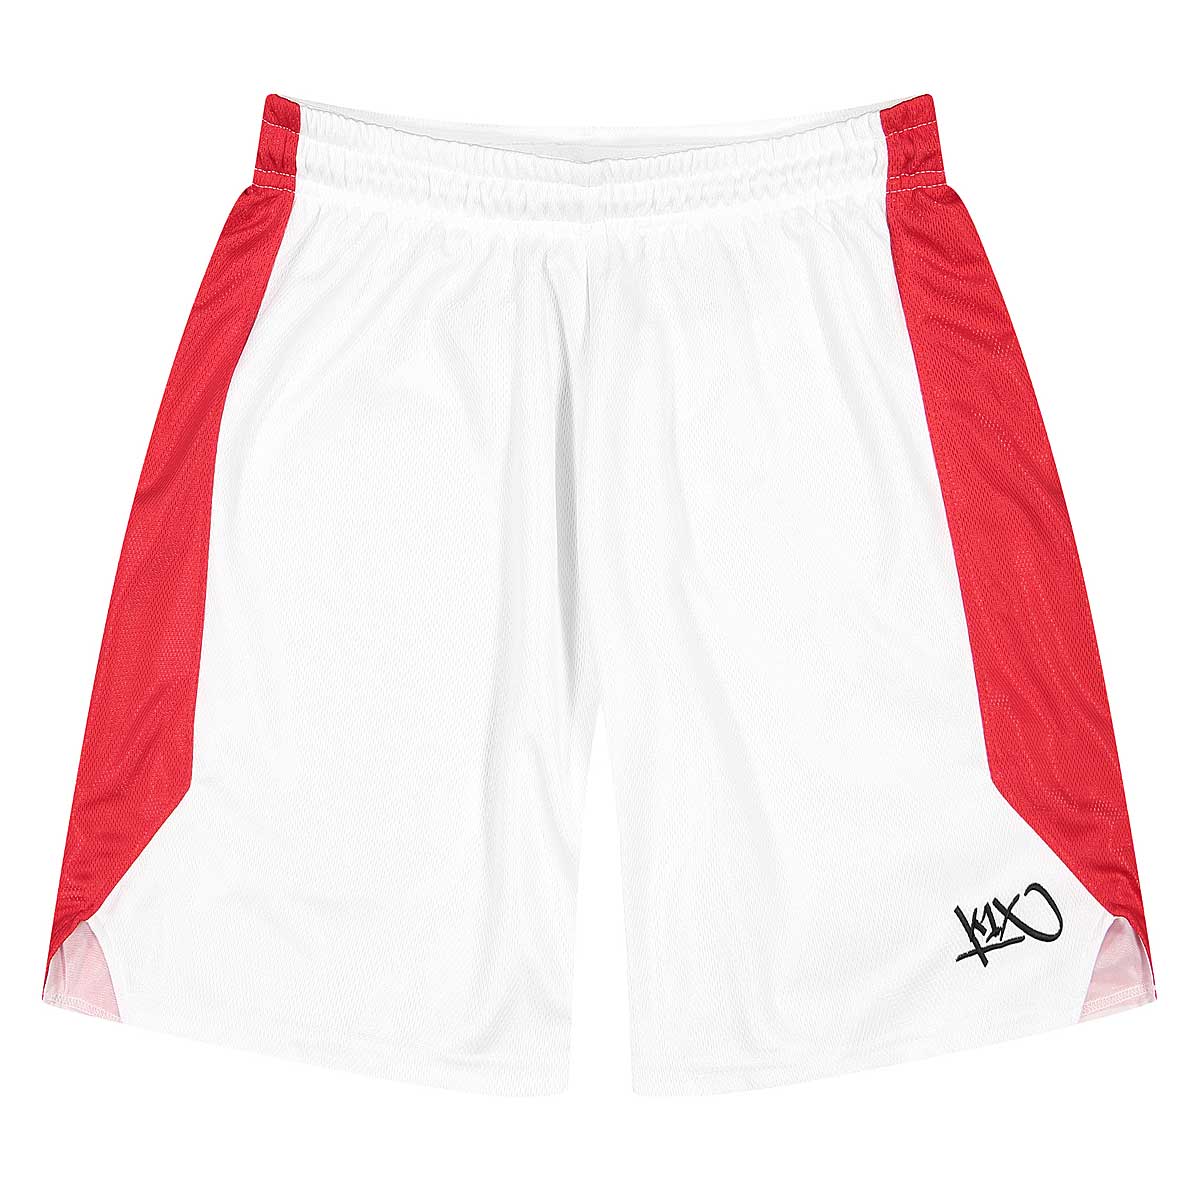 K1X Triple Double Shorts, White/Red